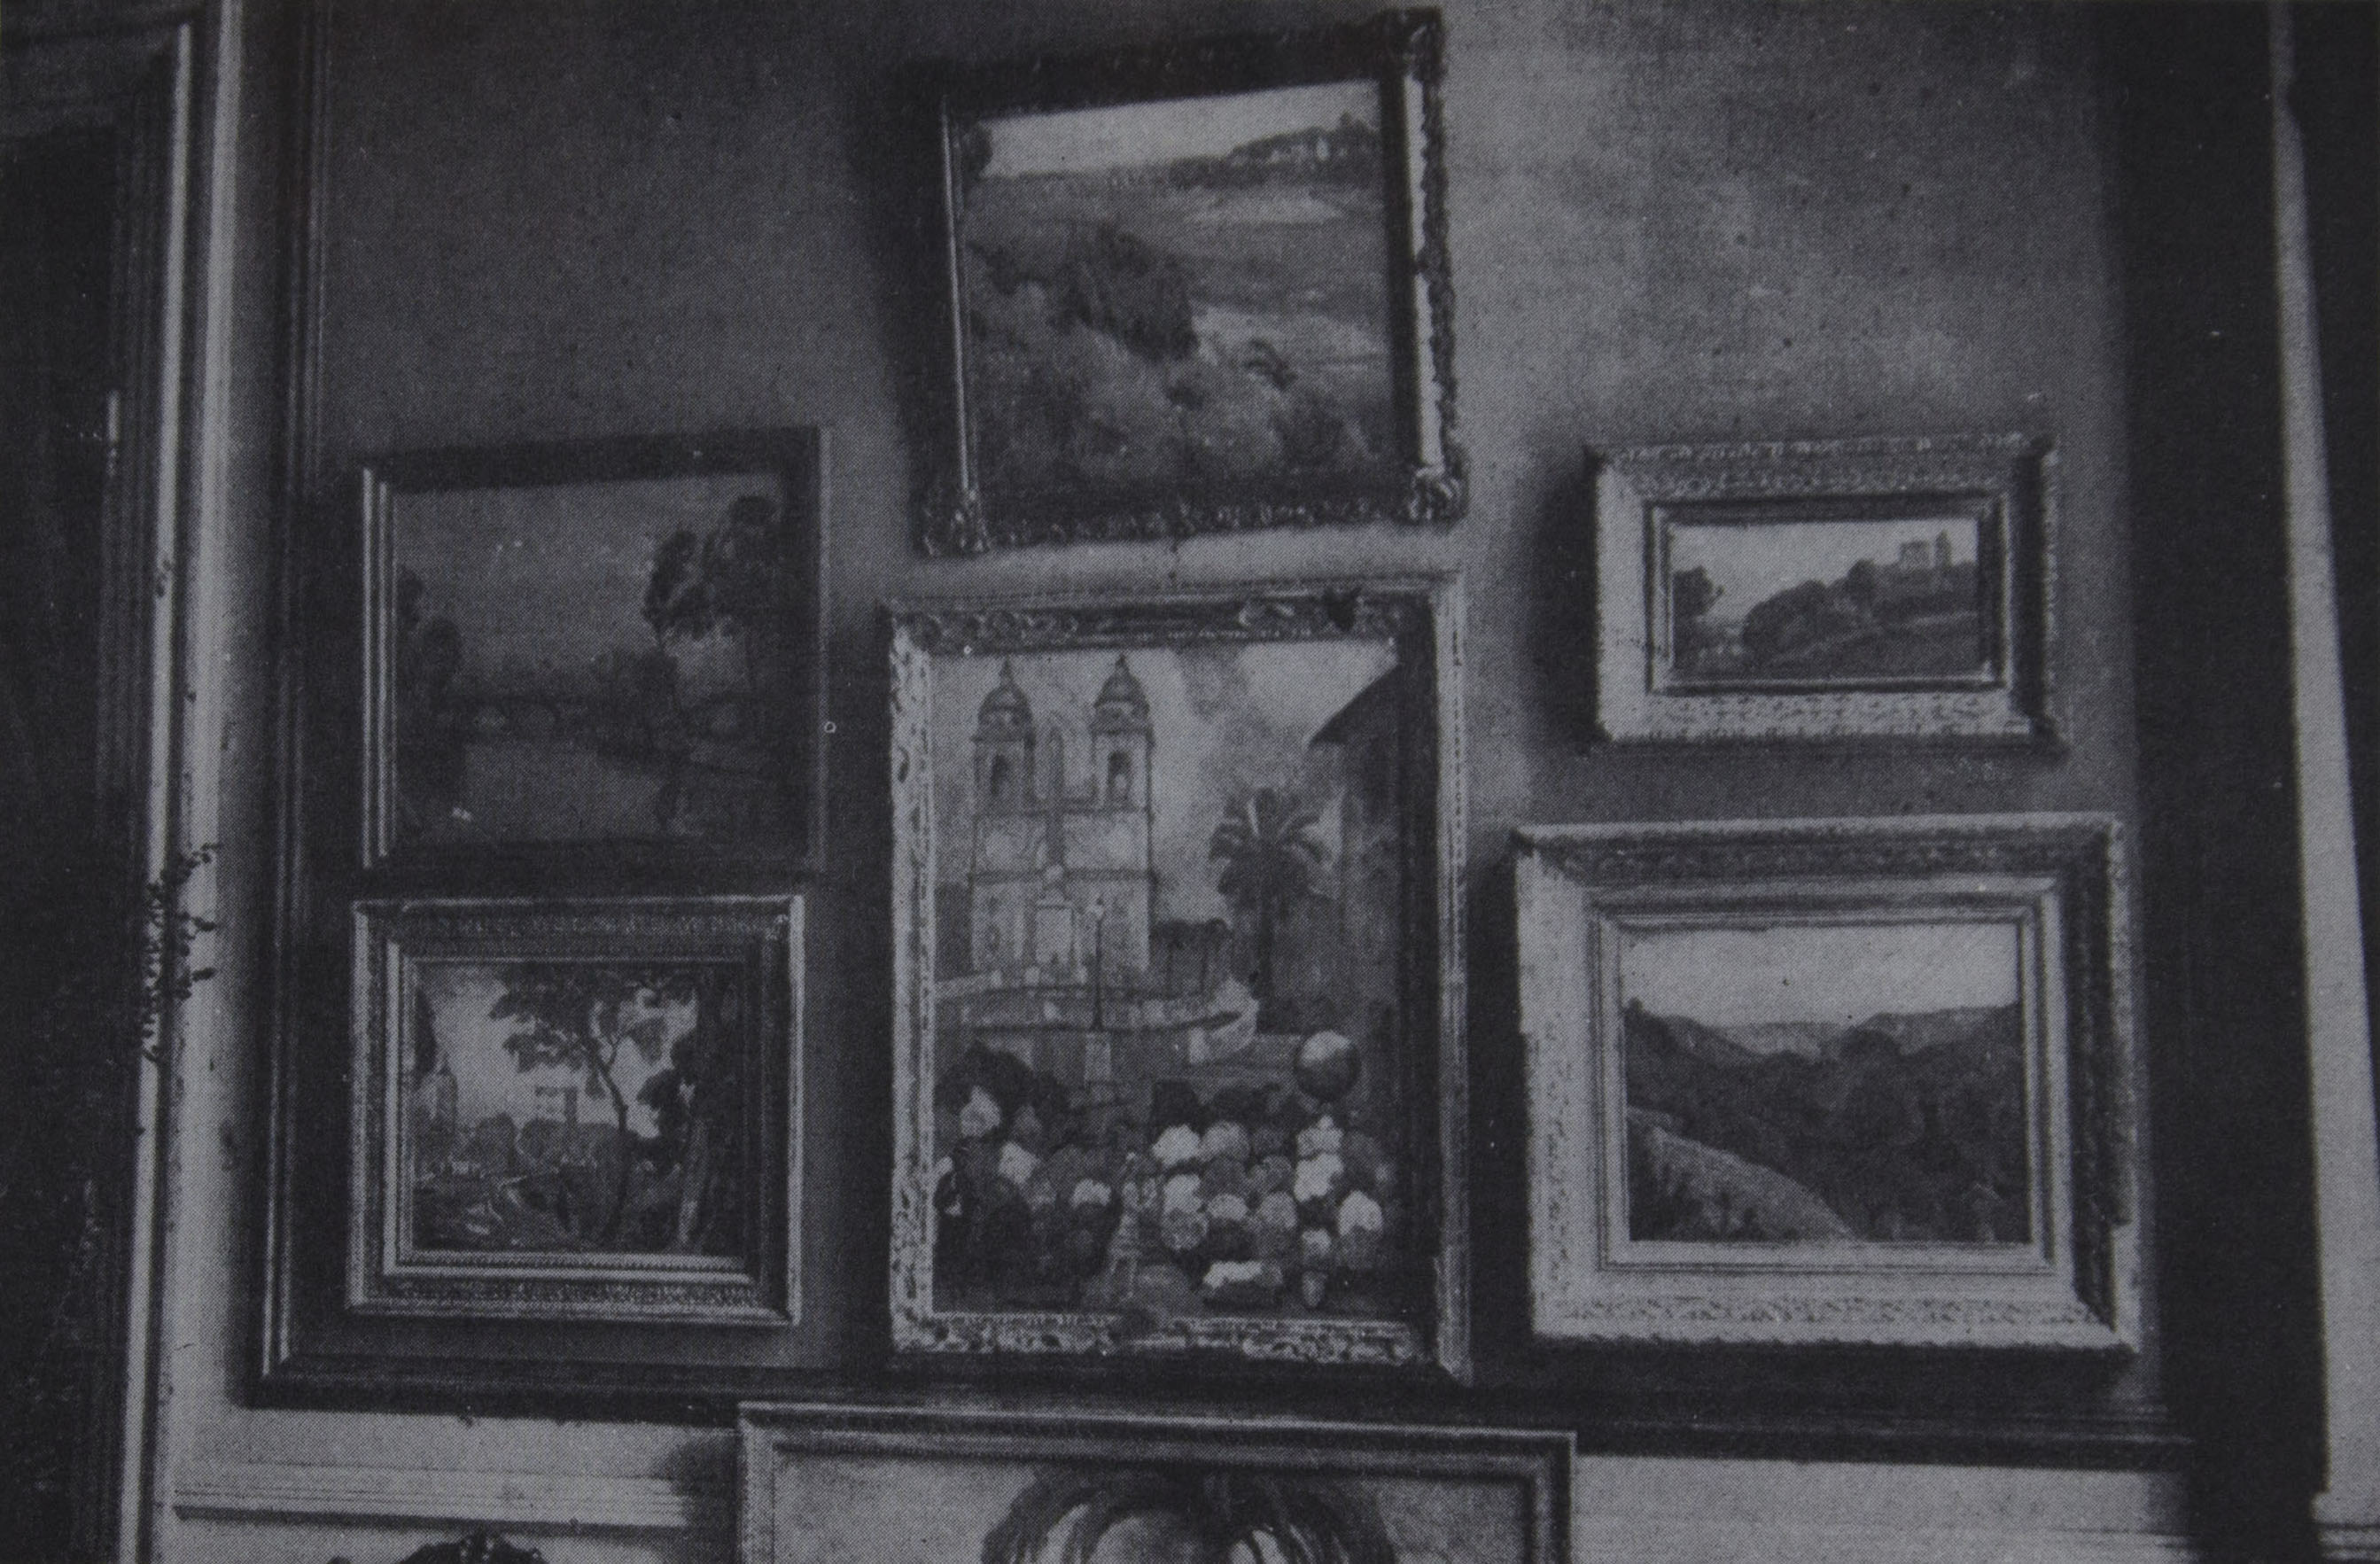 
                     EINAR WEGENER'S (ANDREAS SPARRE) PICTURES AT Copenhagen EXHIBITION, 1930, IN
                            LIFETIME OF LILI ELBE
                  